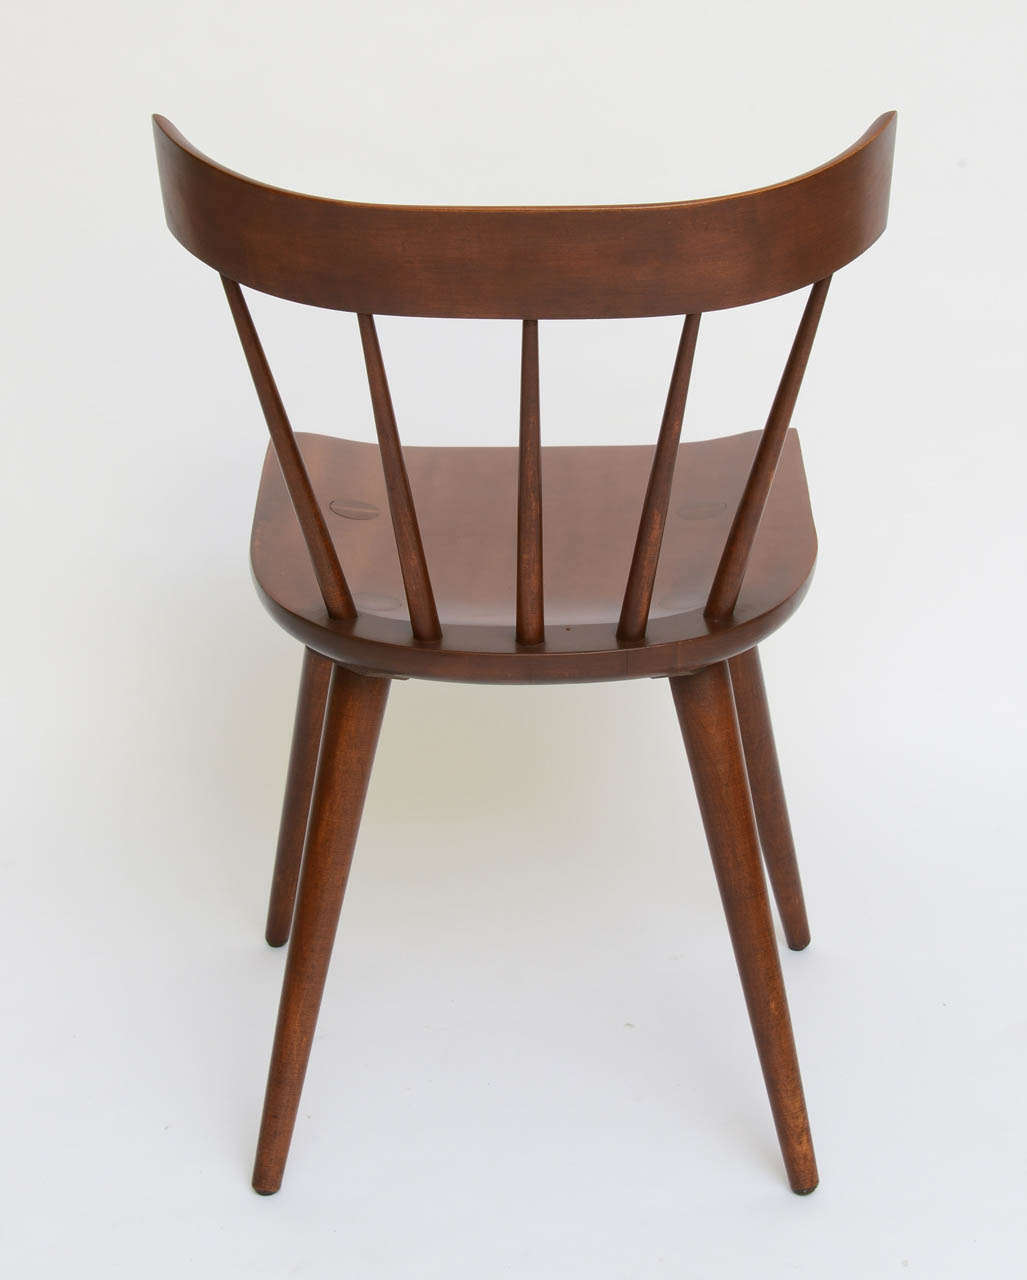 Single Paul McCobb Spindle Back Chair in Dark Maple 1